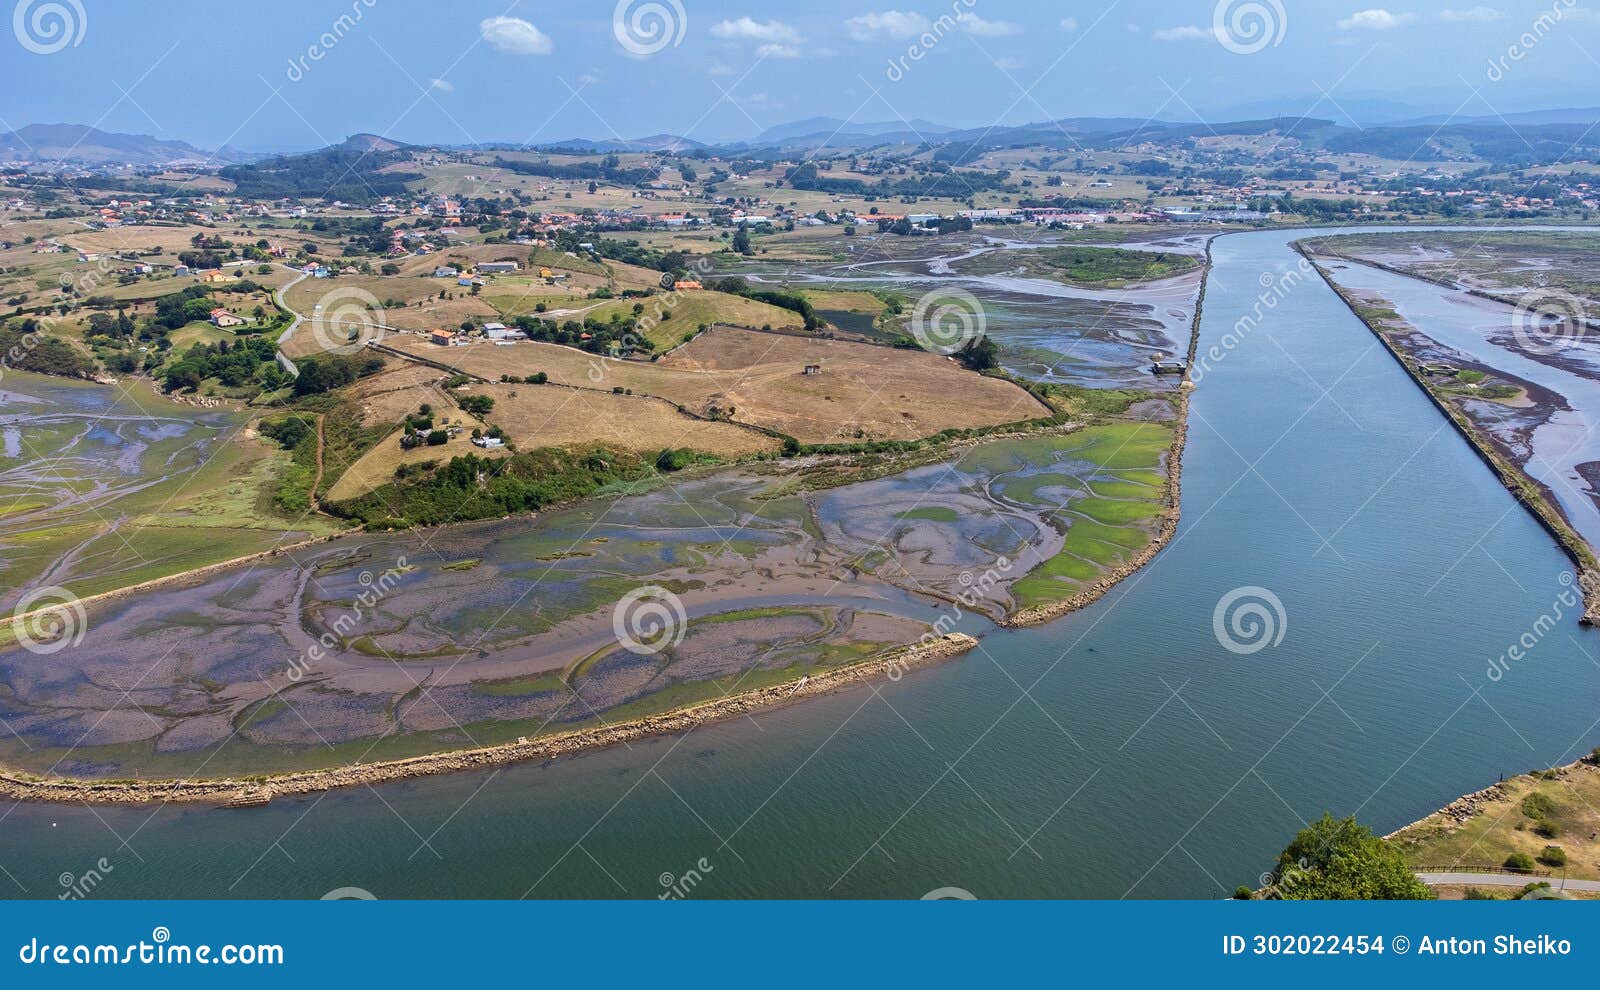 river, estuary, and rural landscape. aerial view. besaya, cantabria, spain